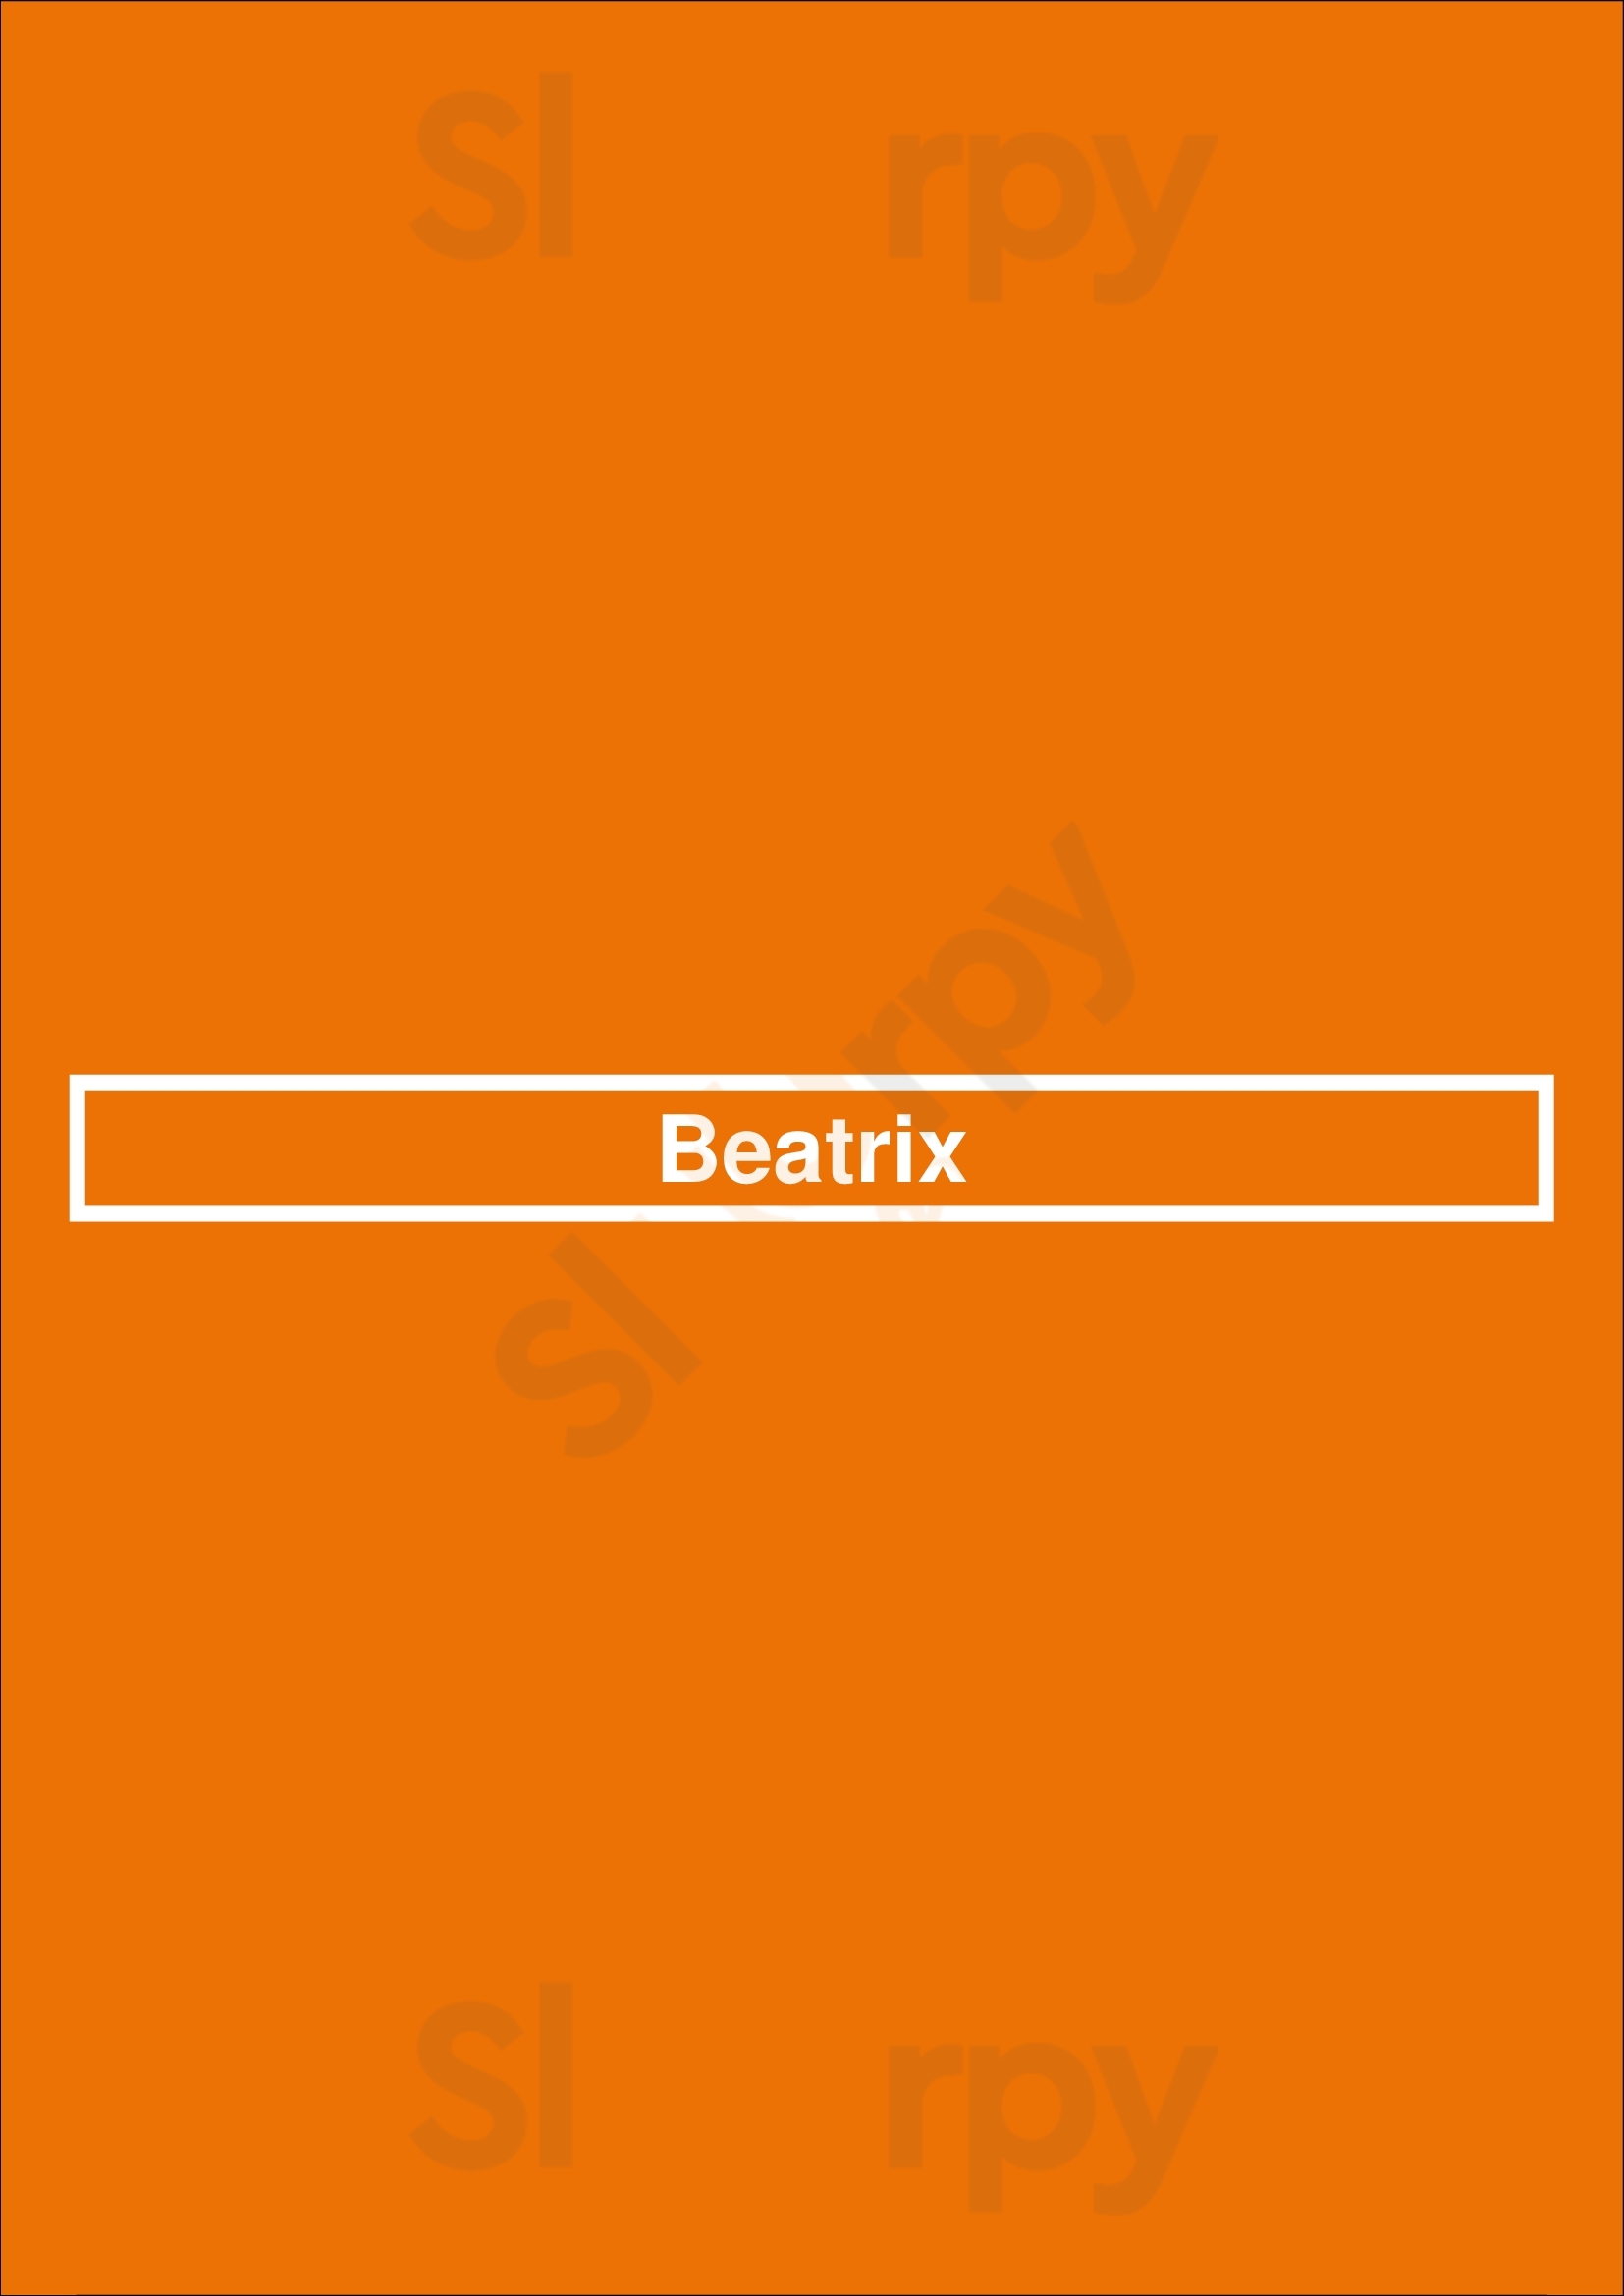 Beatrix Chicago Menu - 1